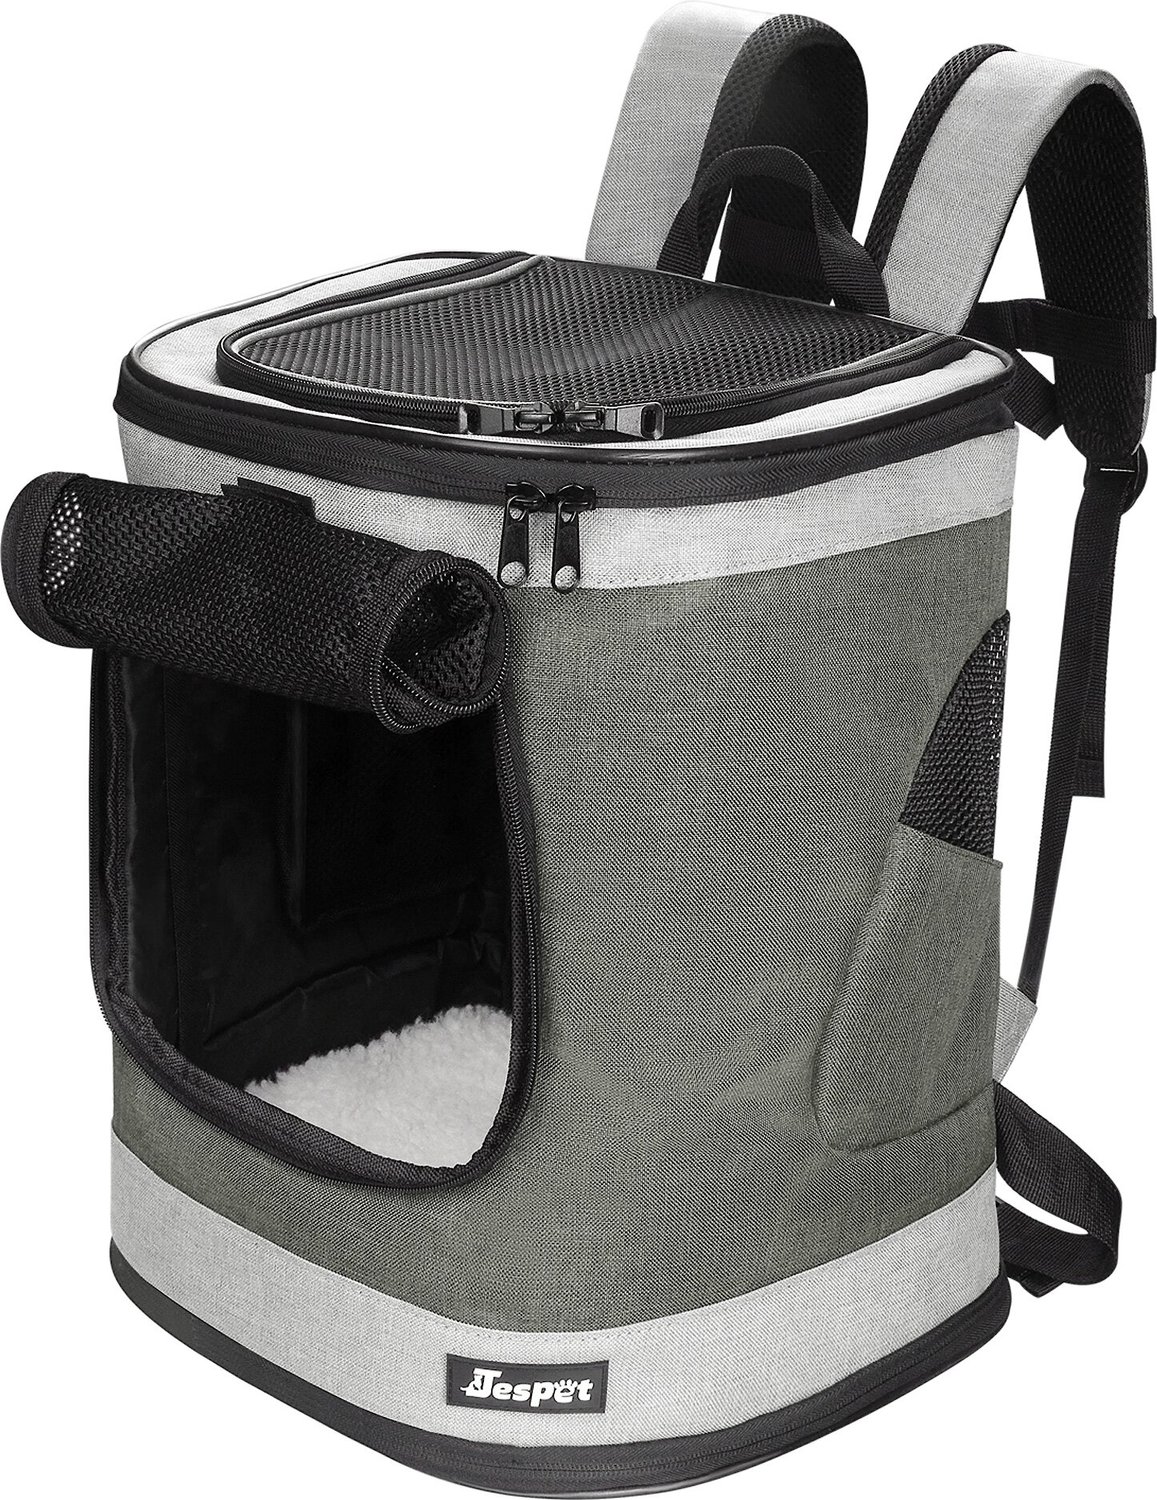 Jespet Dog & Cat Carrier Backpack, 17-in